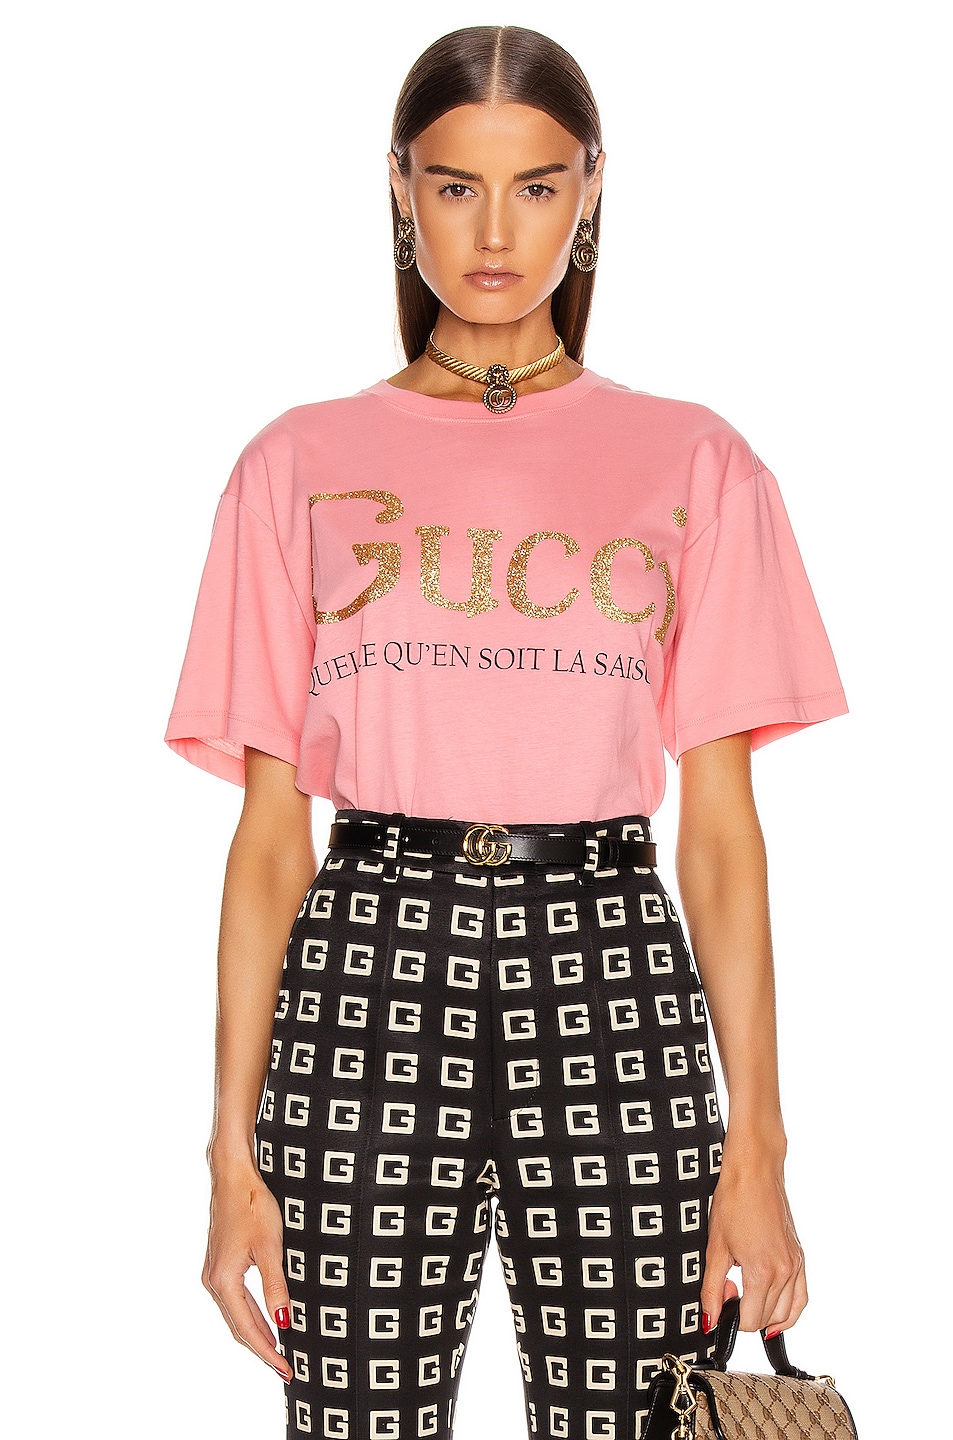 Gucci Short Sleeve T Shirt in Rose Bud & Mult | FWRD